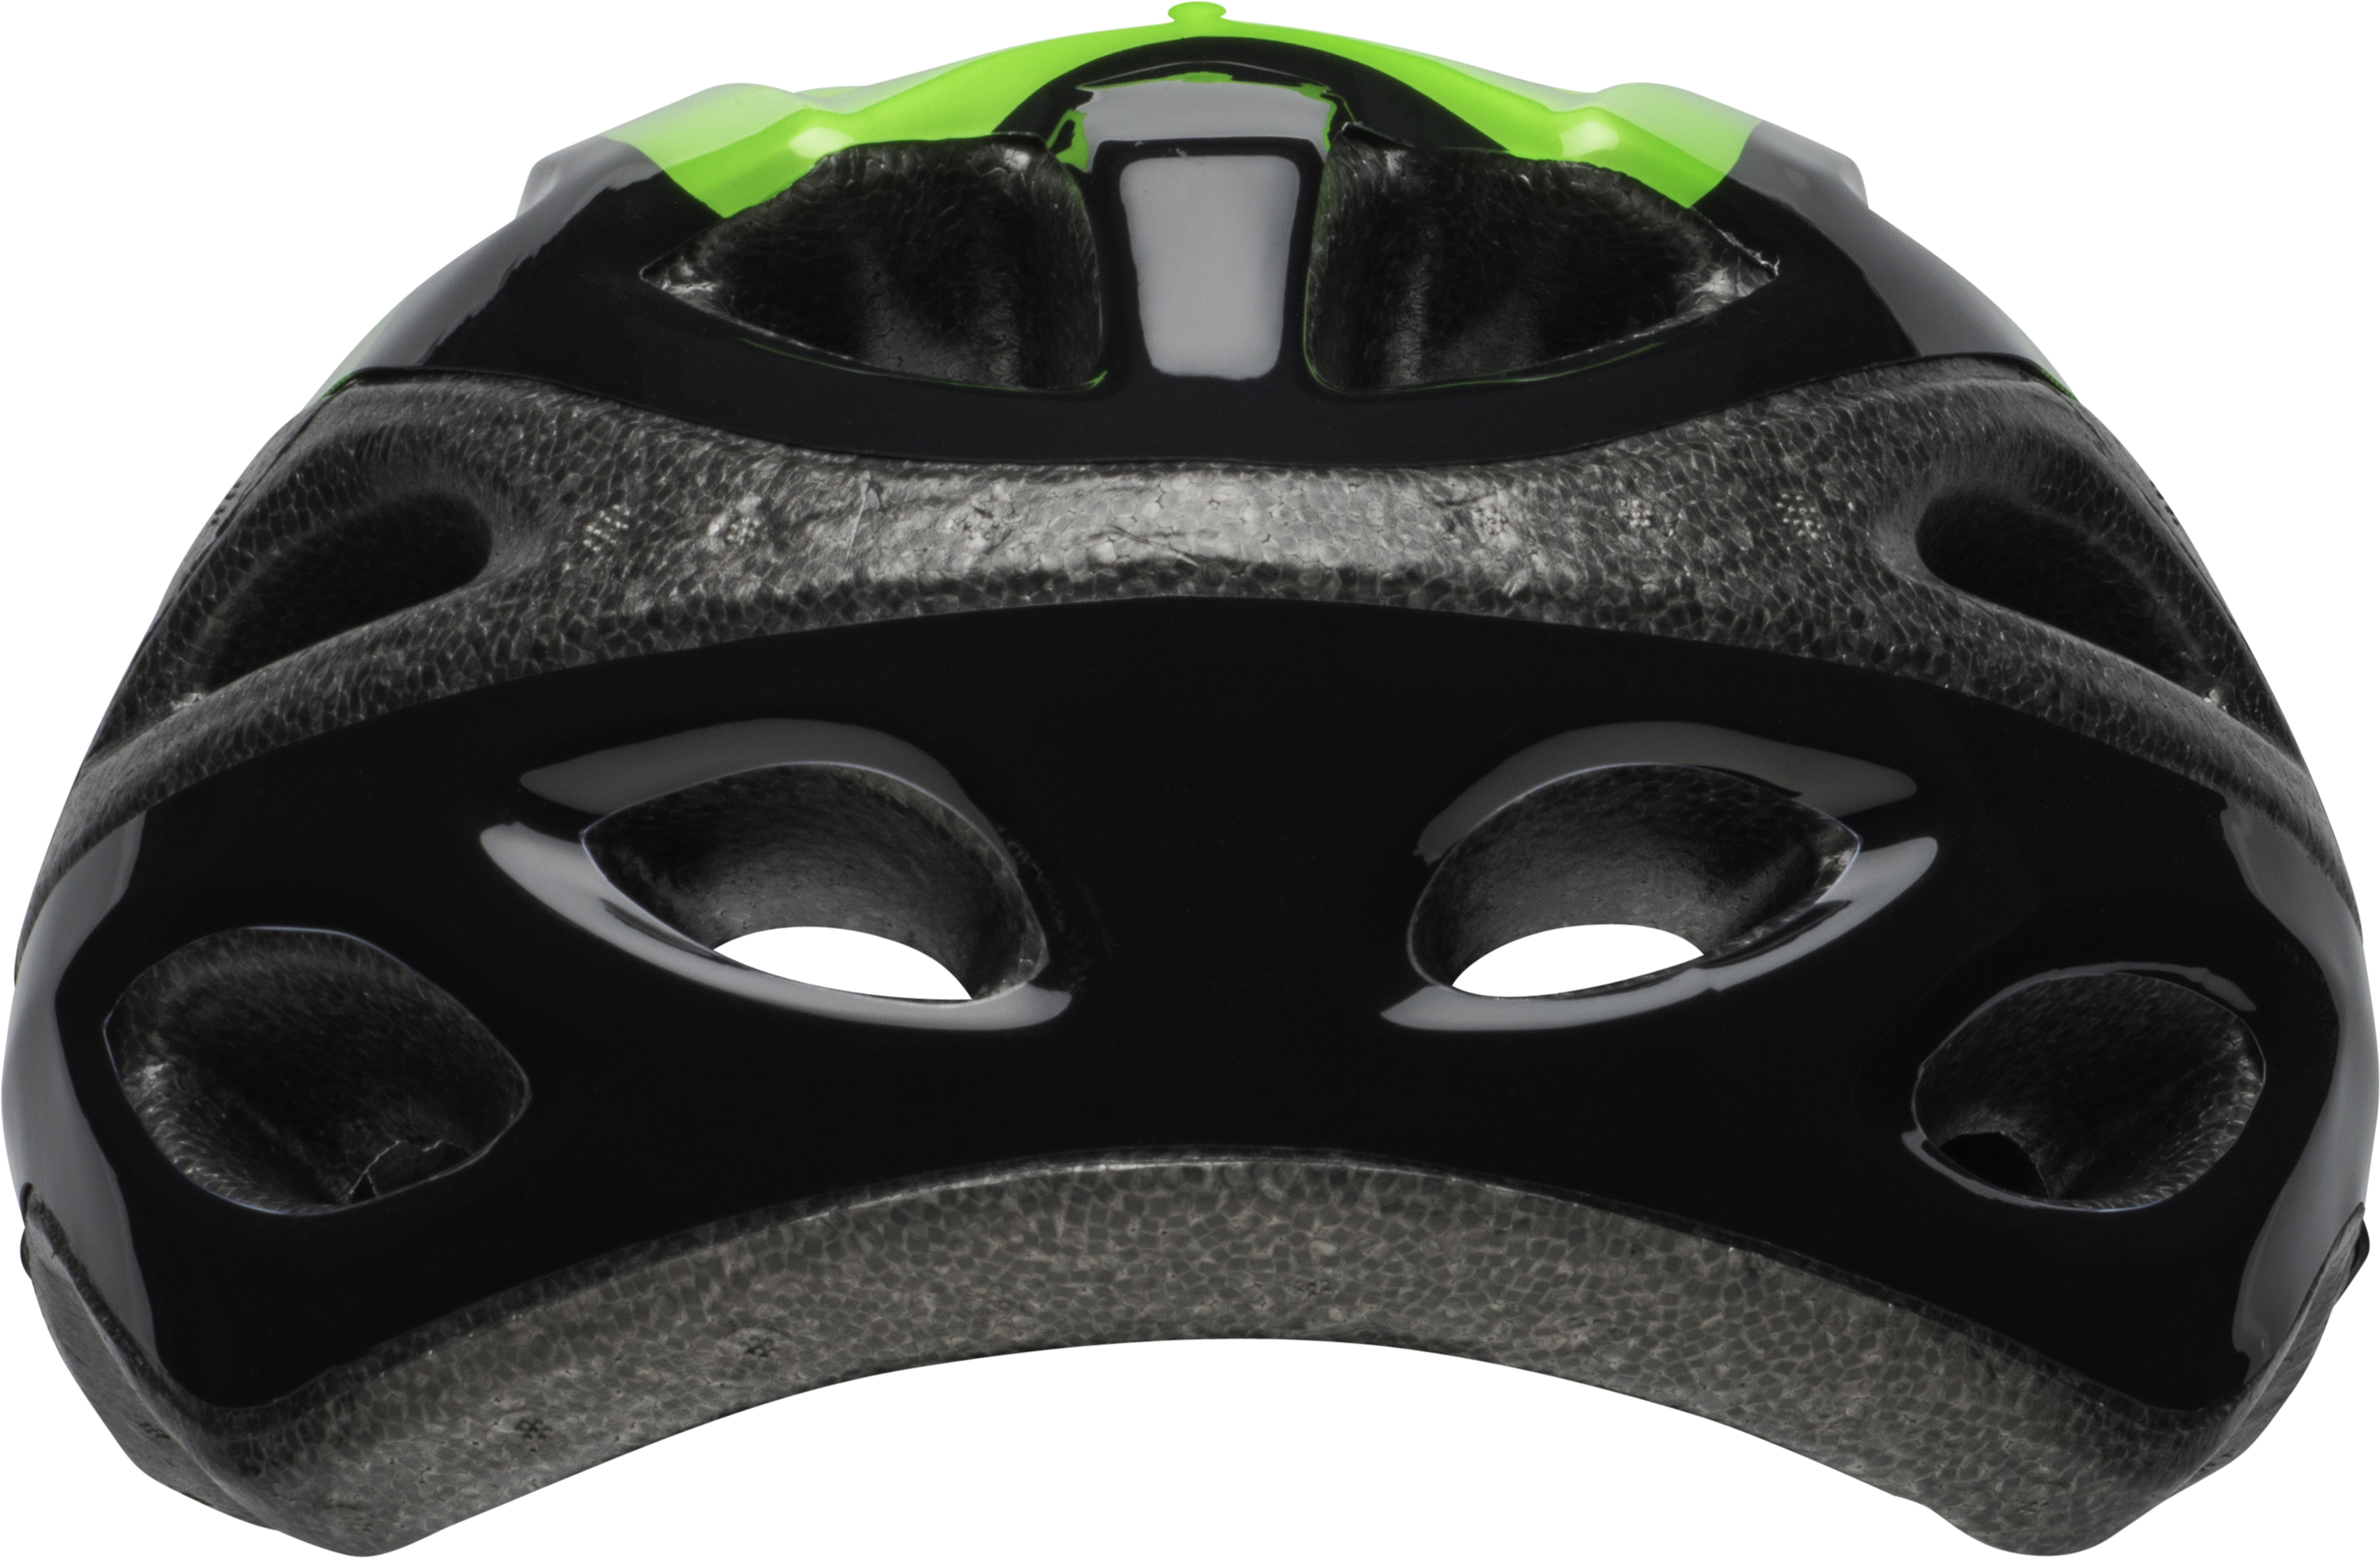 Bell Axle Bike Helmet, Black/Green, Adult 14+ (54-61cm) - image 4 of 9